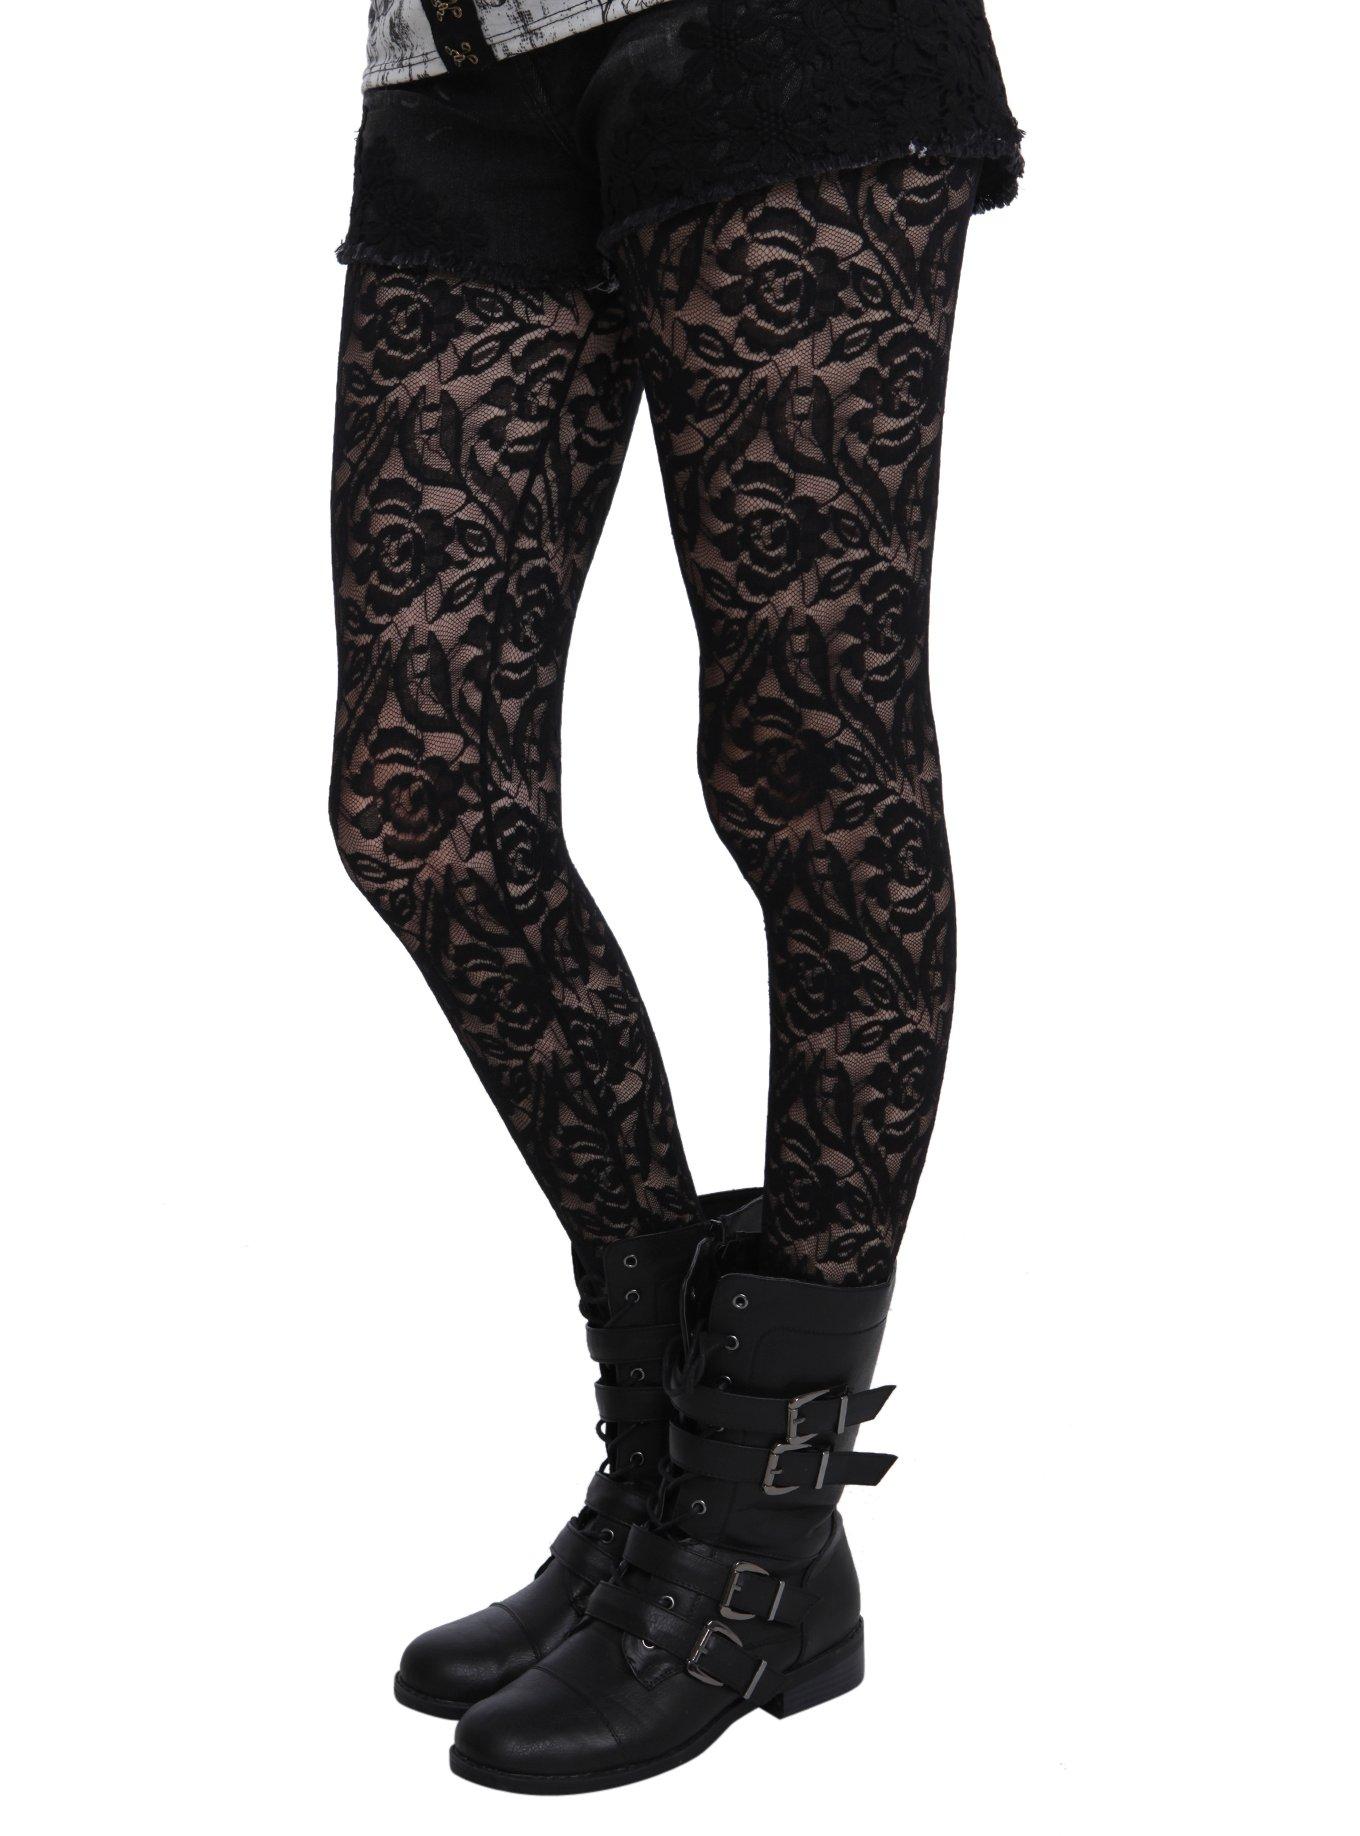 Black Lace Legging